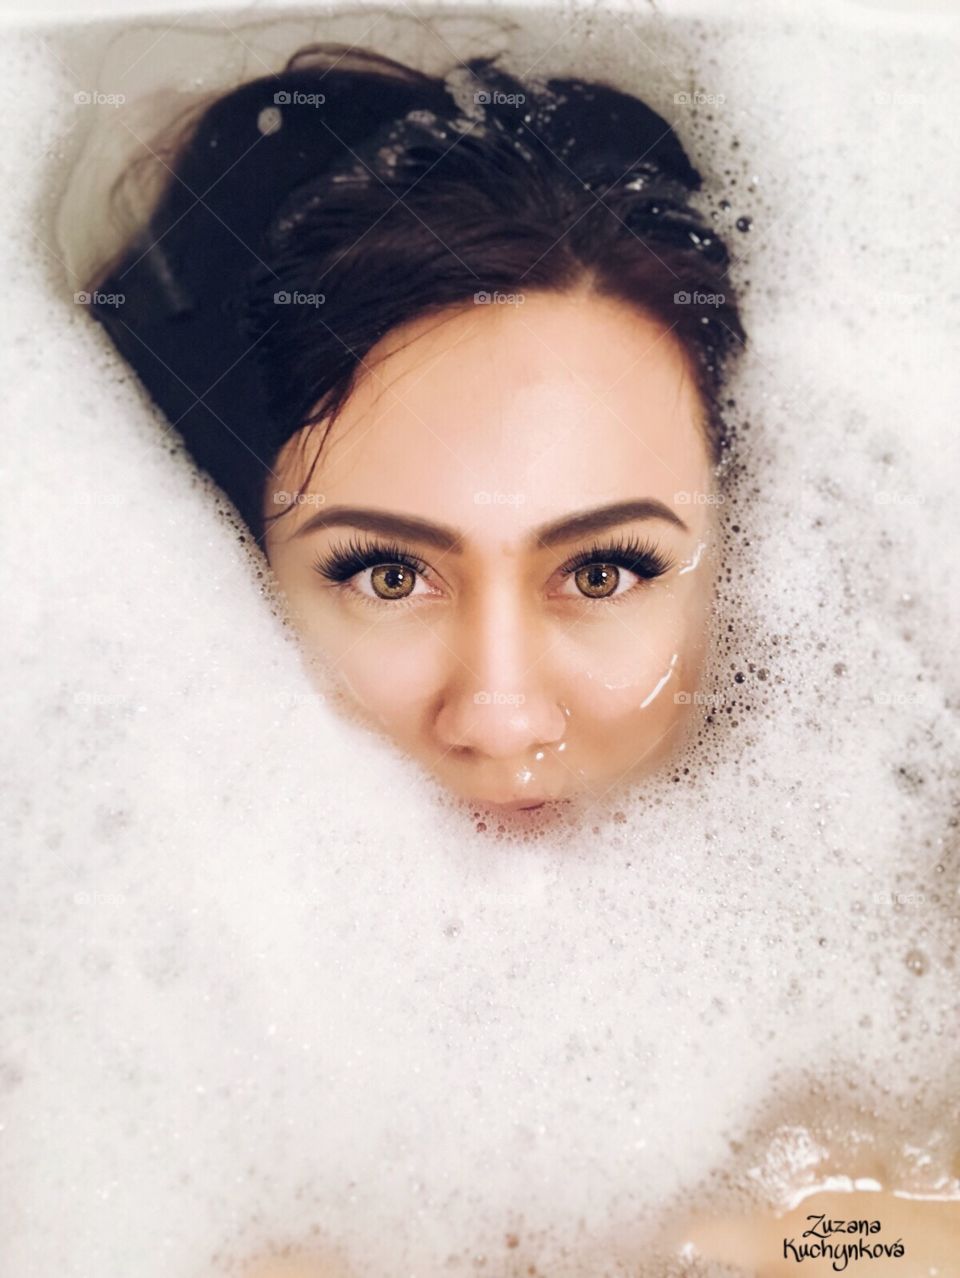 Me in bath 